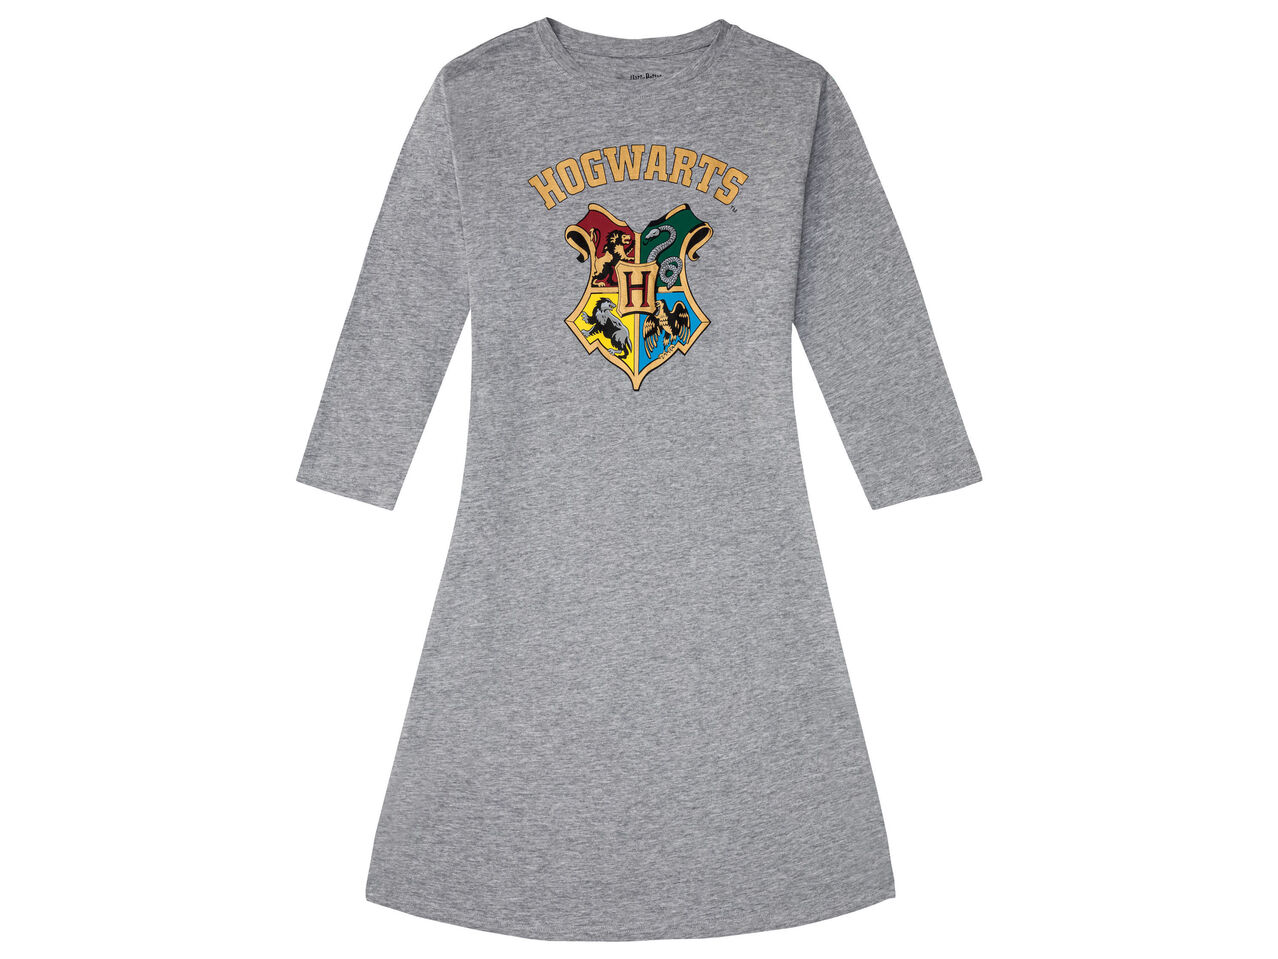 Koszula nocna damska z kolekcji Harry Potter , cena 34,99 PLN 
Koszula nocna damska ...